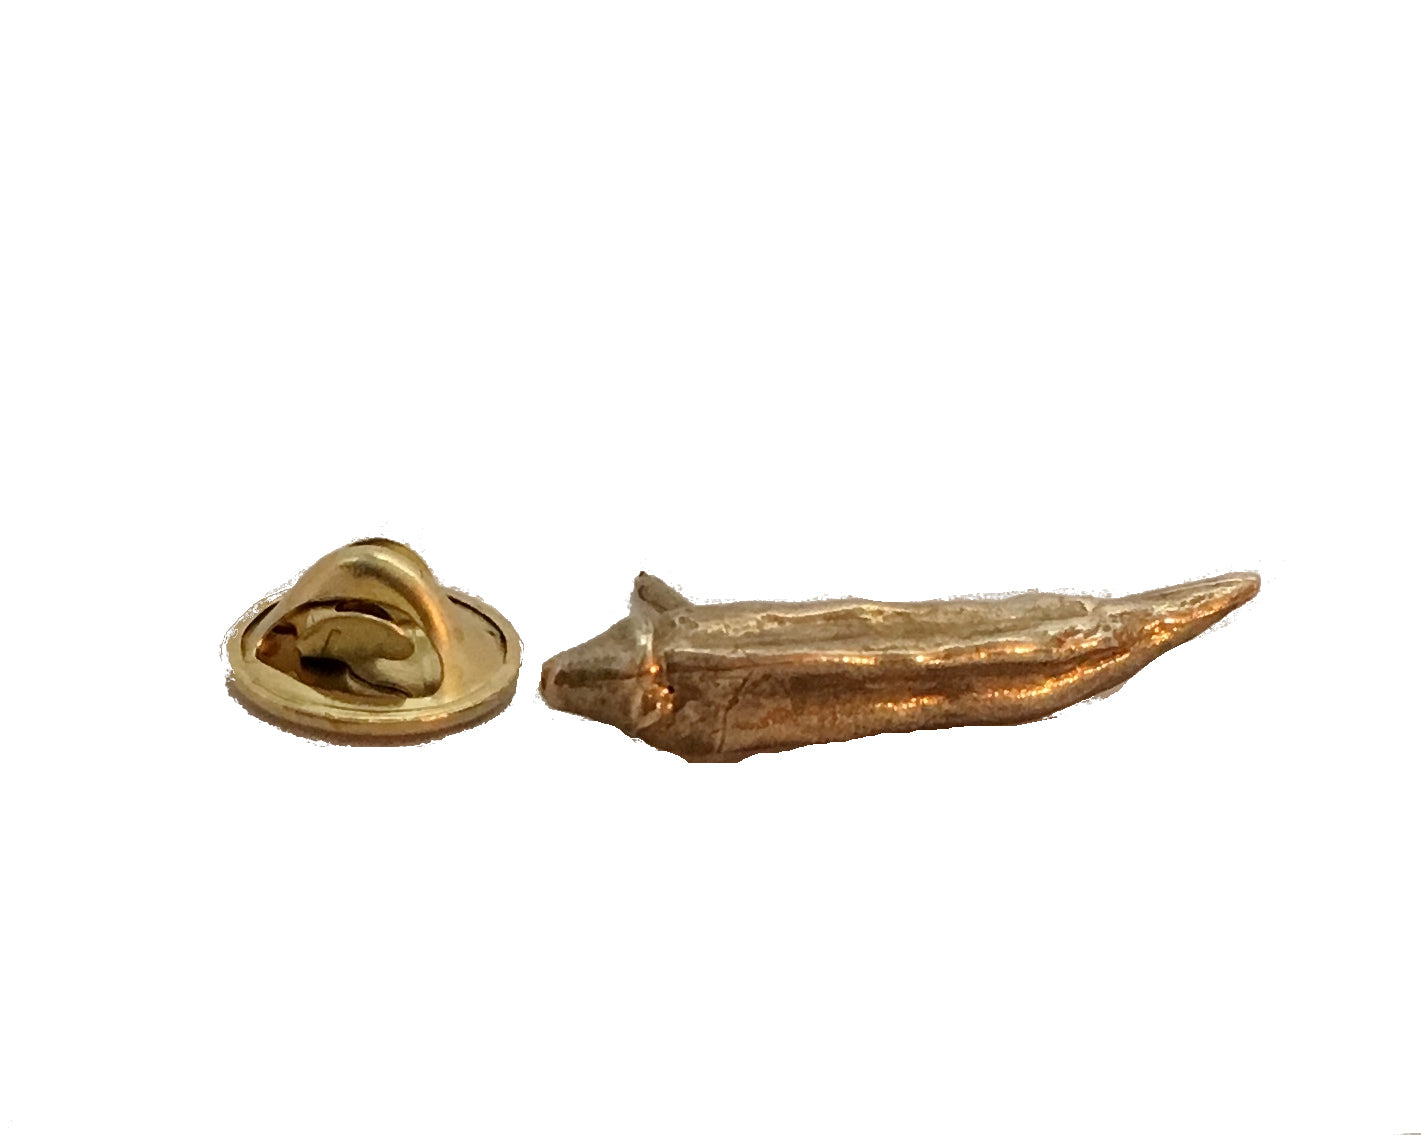 Bronze okra tie tac or lapel pin